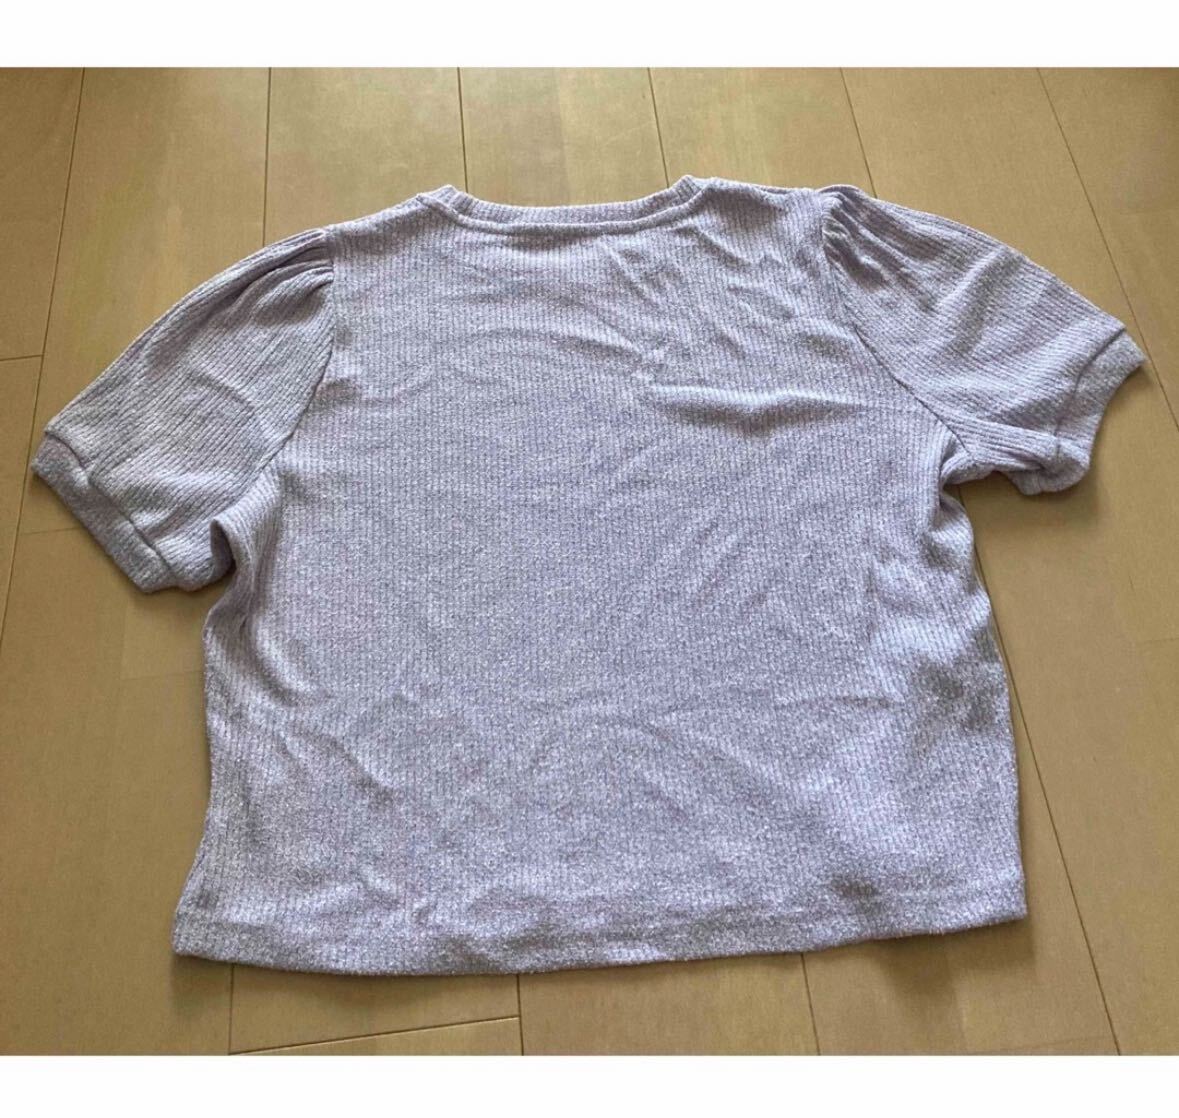 DAZY リブニットTシャツ　パープル/紫　レディースXLサイズ